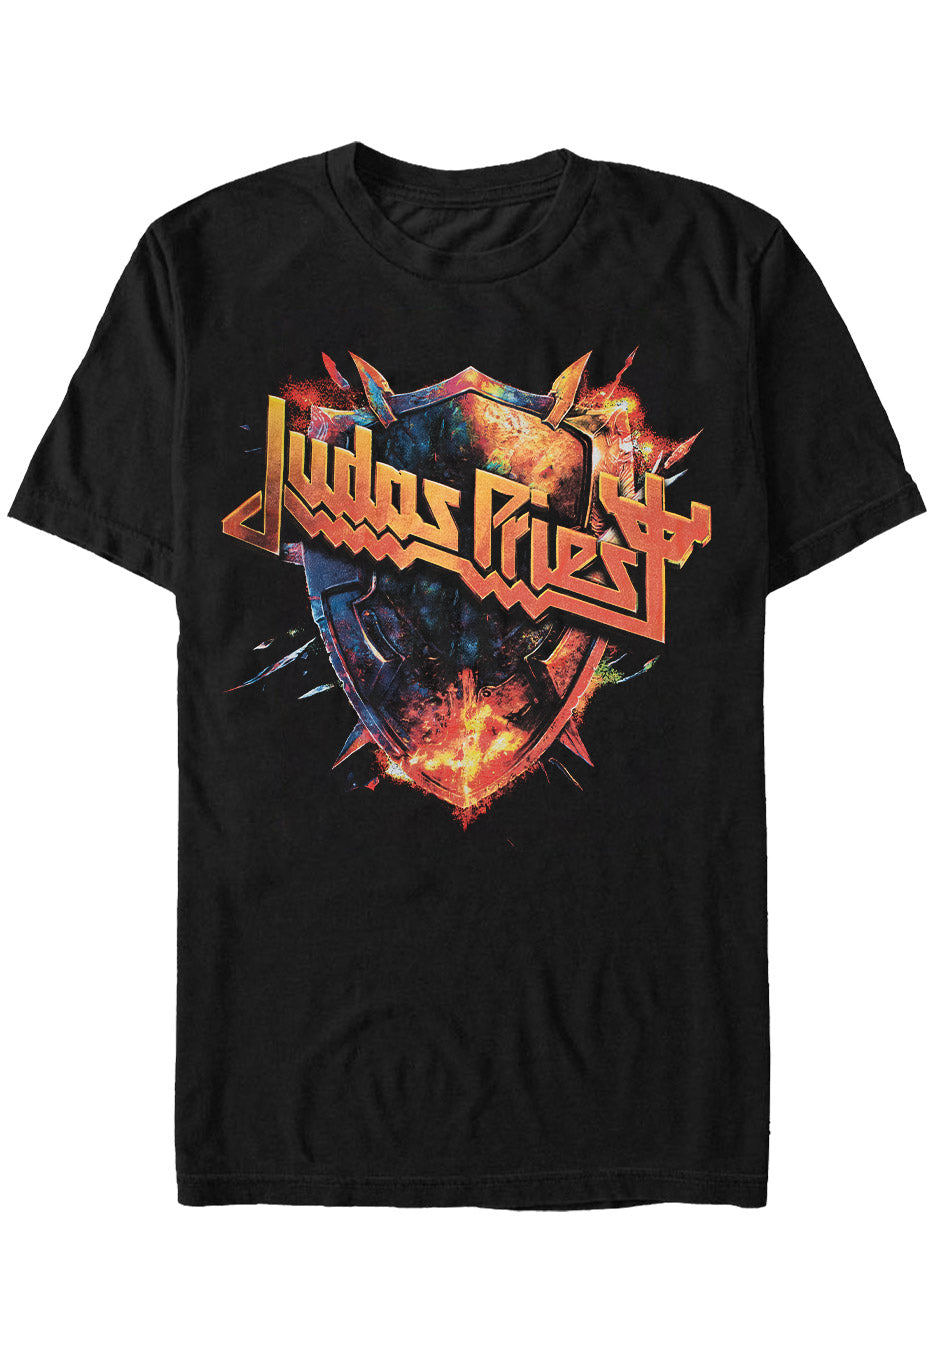 Judas Priest - Invincible Shield Burst - T-Shirt